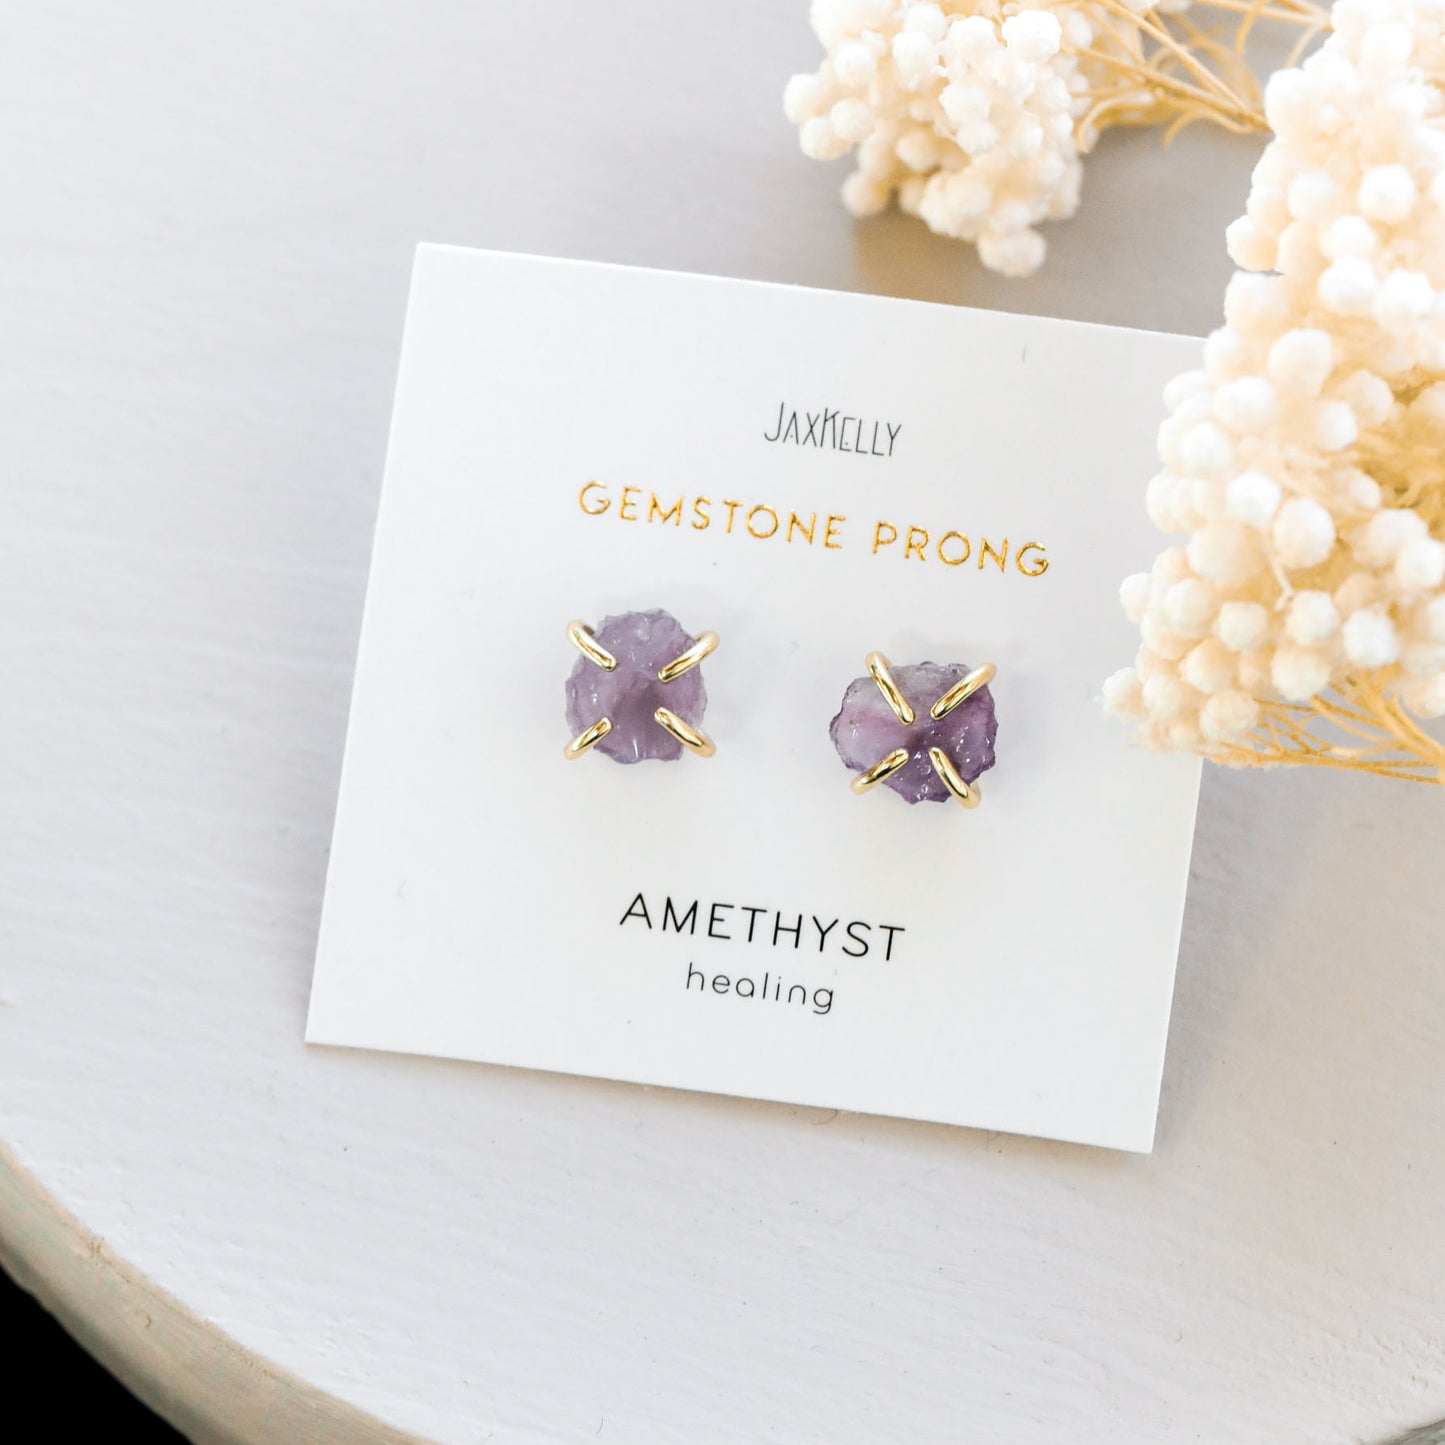 Amethyst Gemstone Prong - Healing